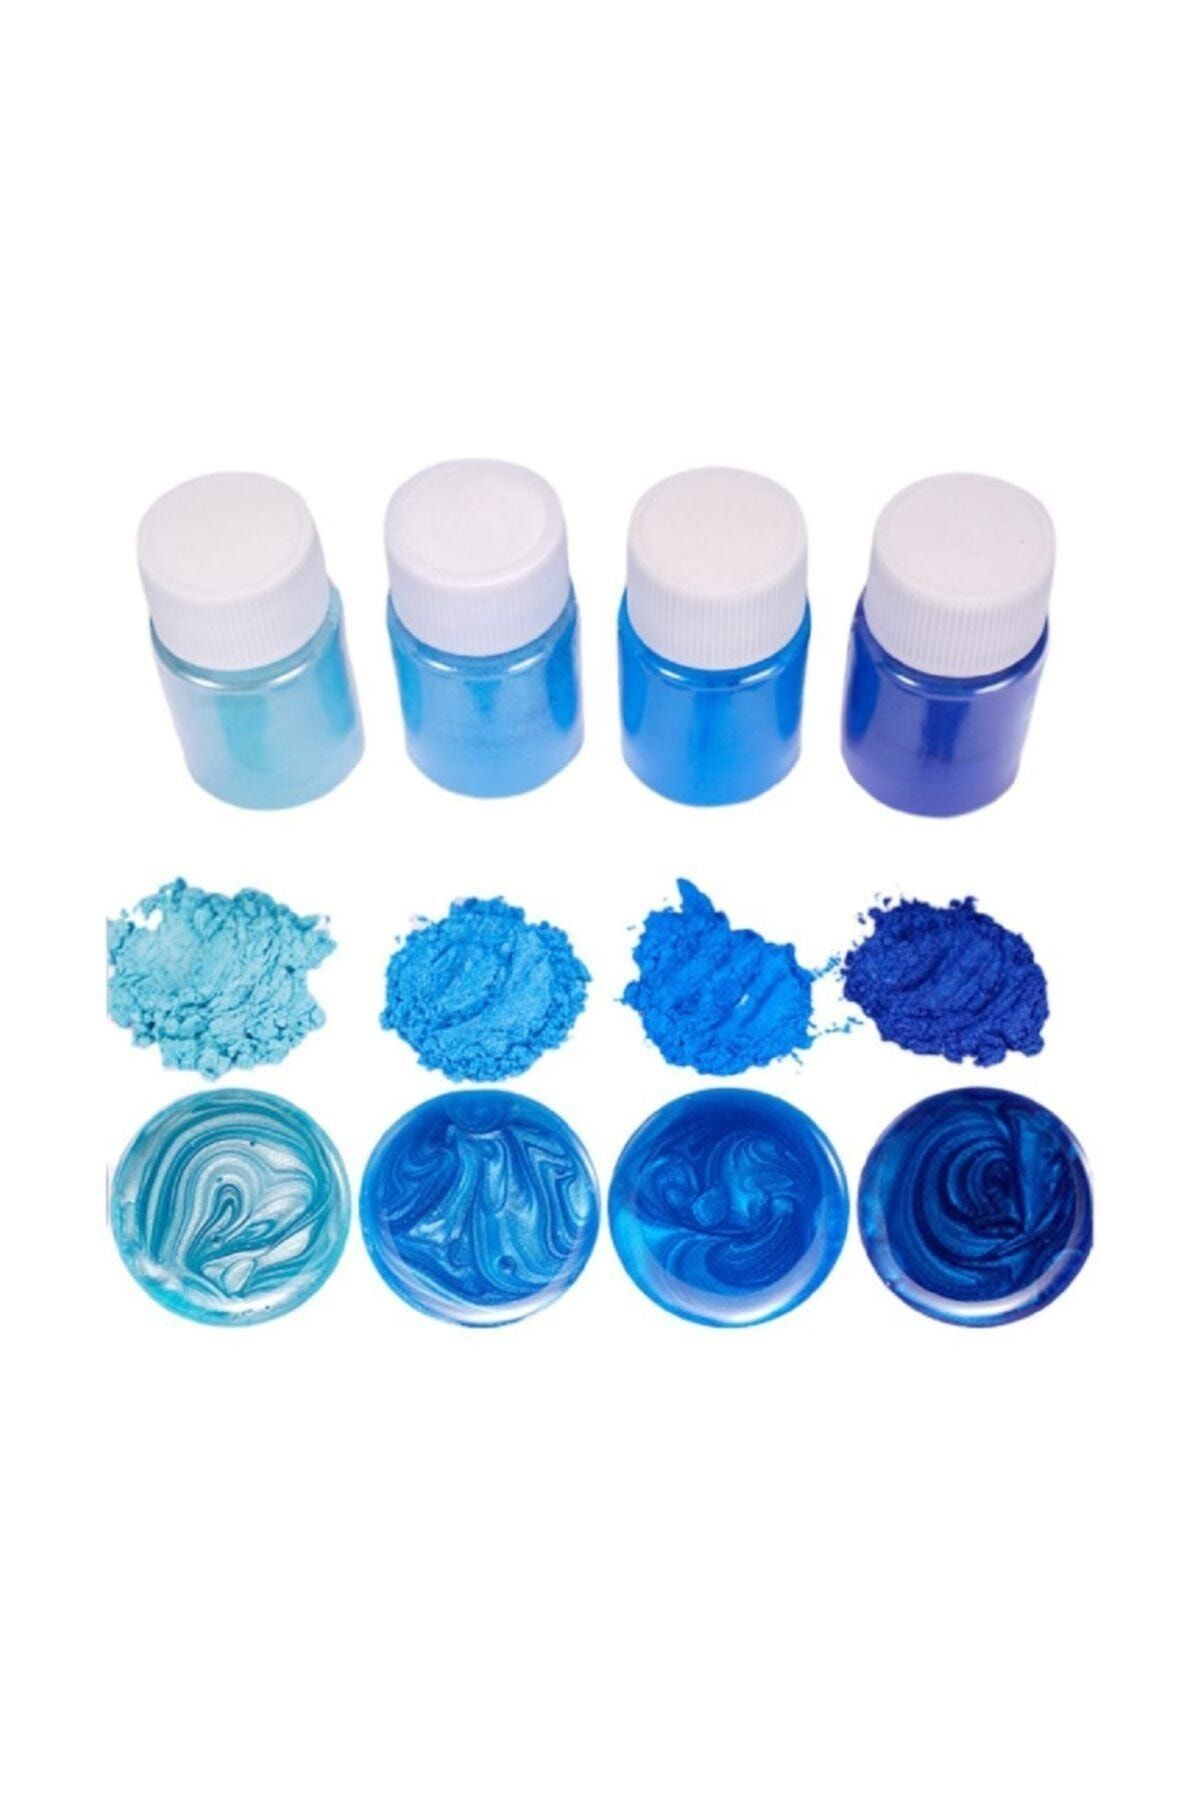 Brtr Kimya 4 Renk Mavi Sedefli Epoksi Metalik Toz Pigment Seti